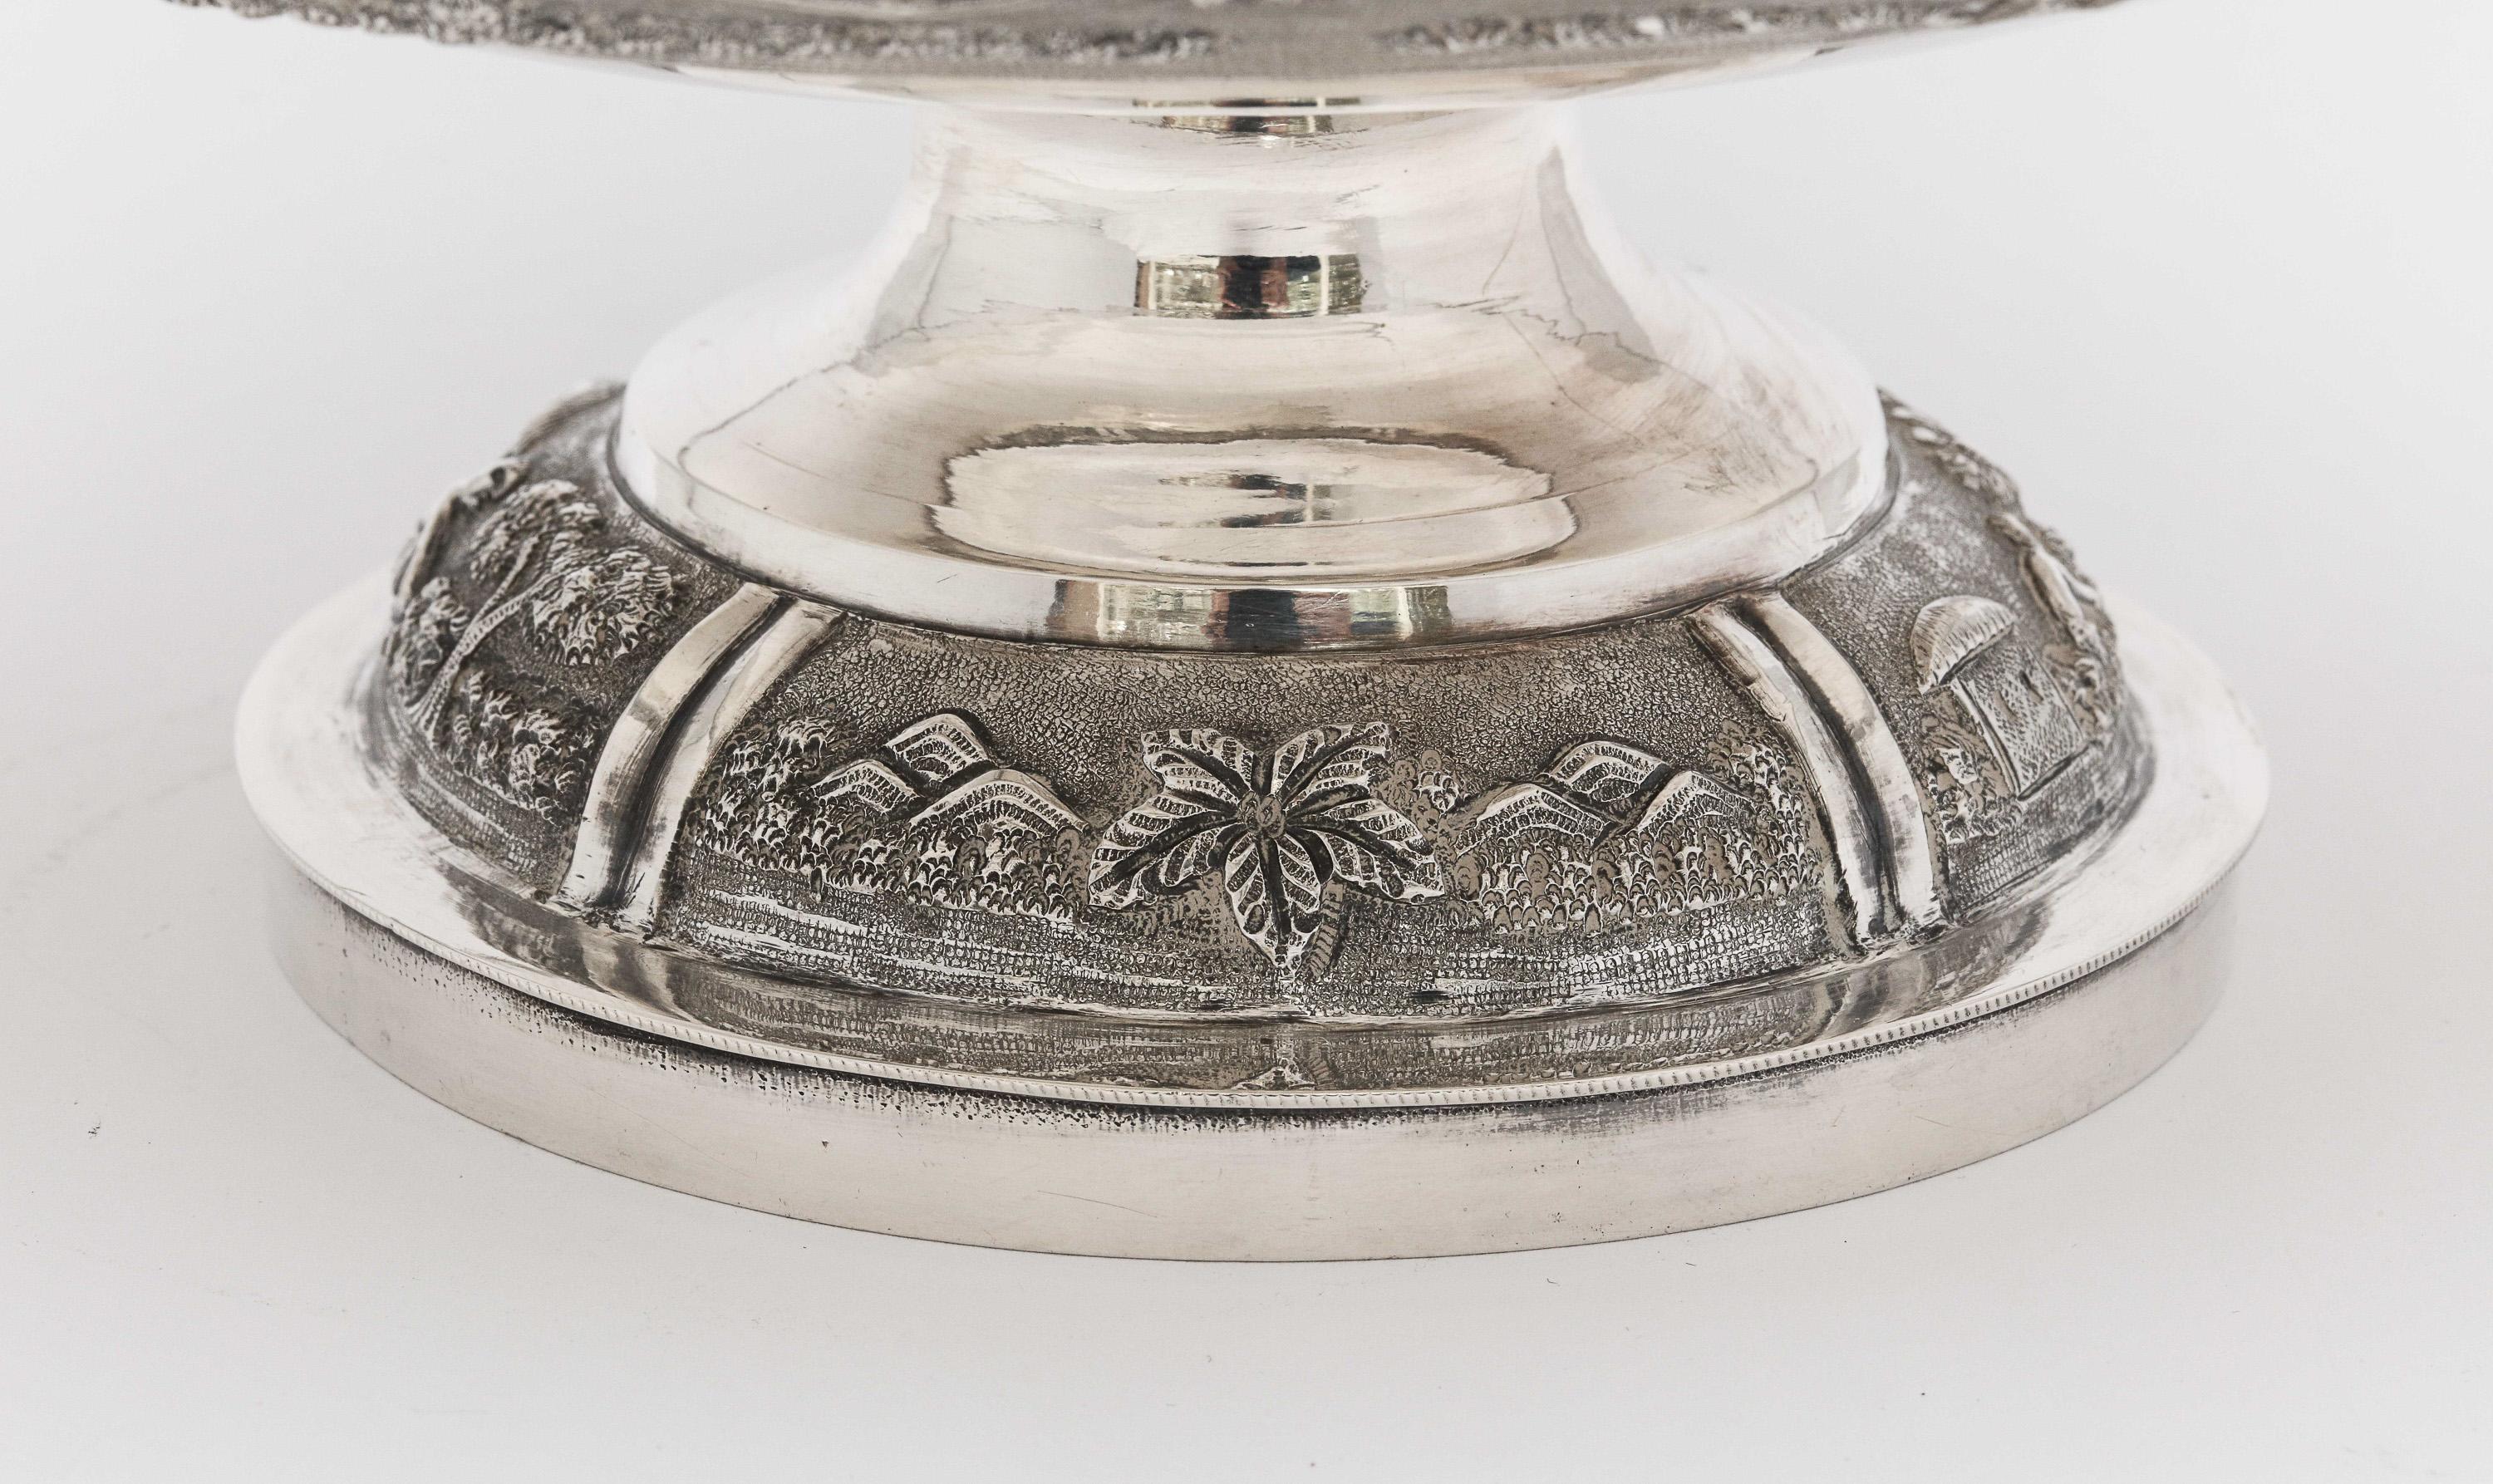 Late 19th Century Burmese/Myanmar Silver Pedestal-Based Bowl 2